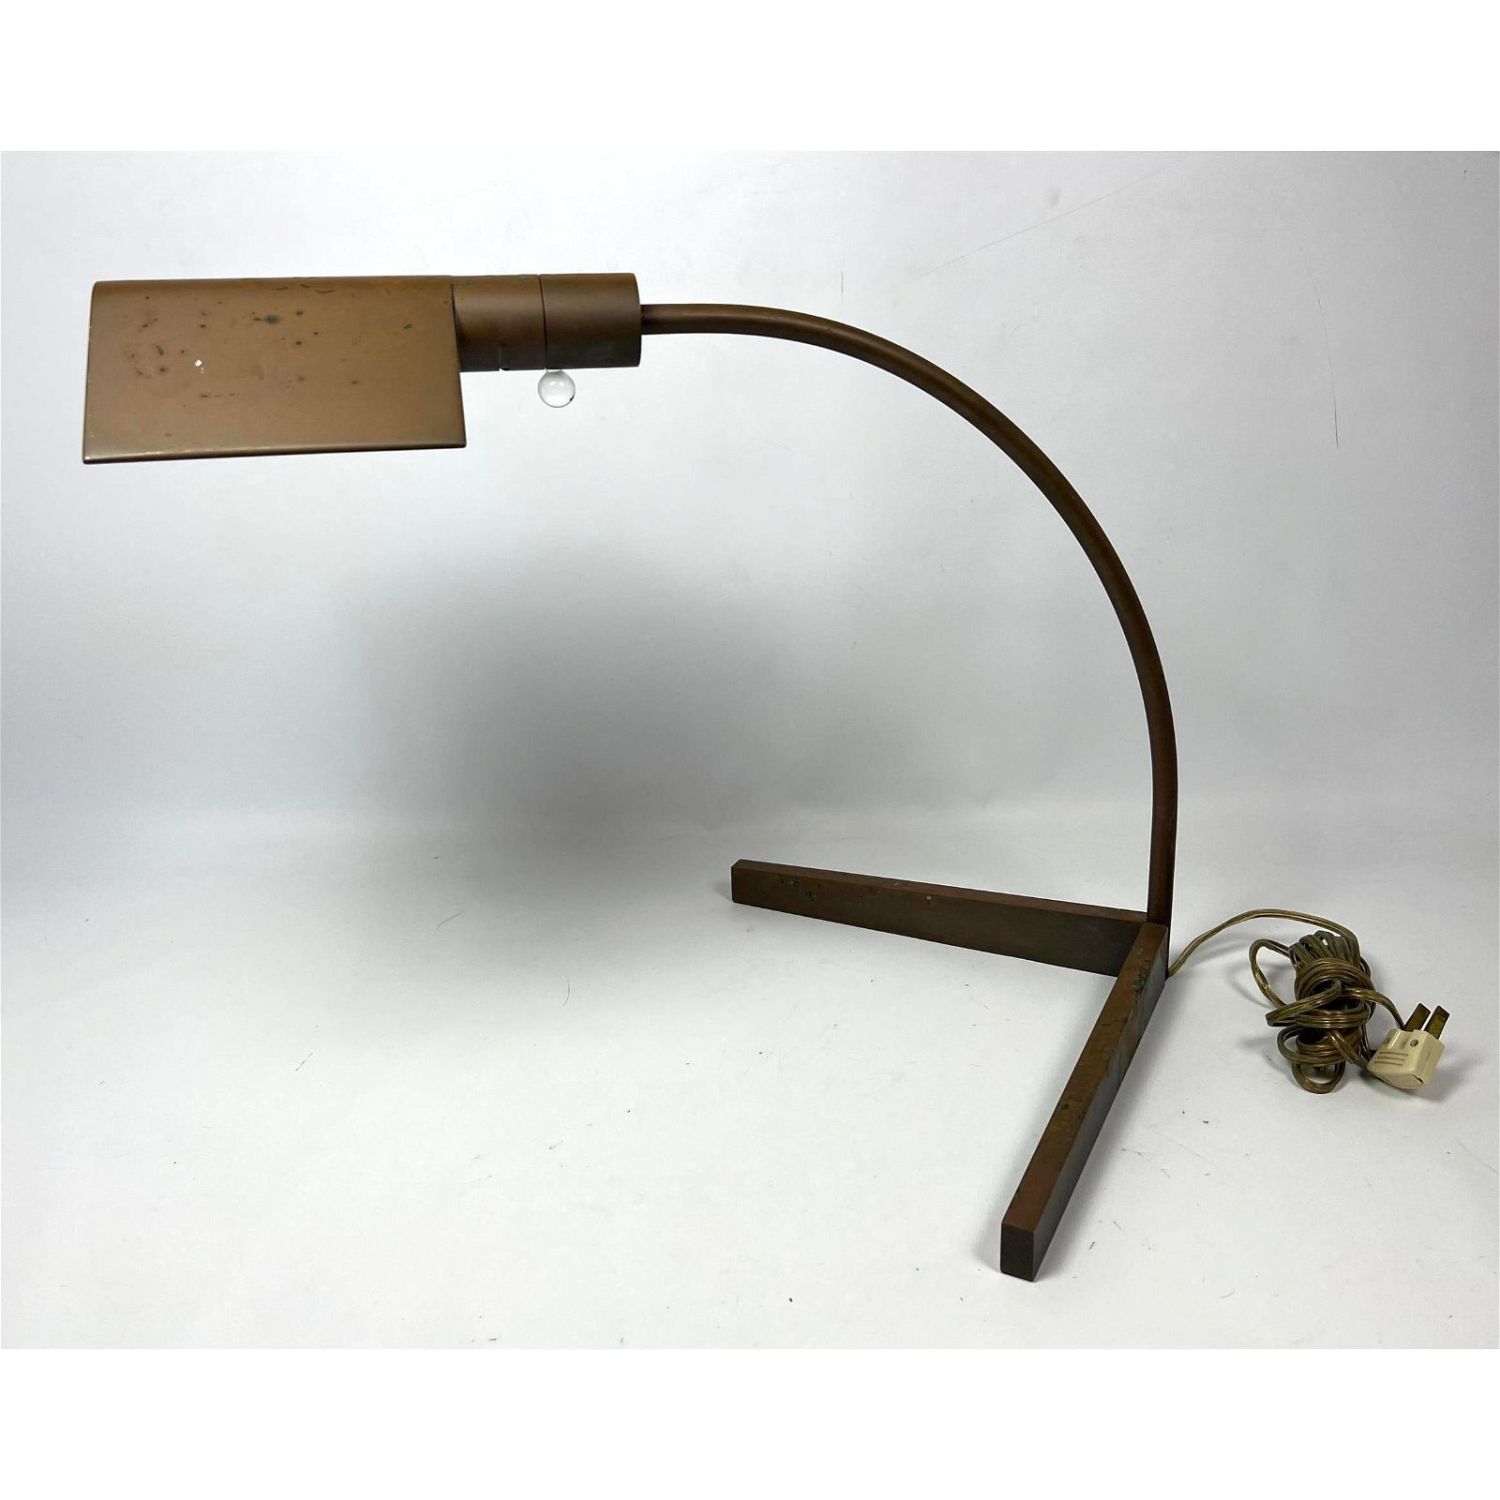 CEDRIC HARTMAN Arched Table Lamp  362c8e